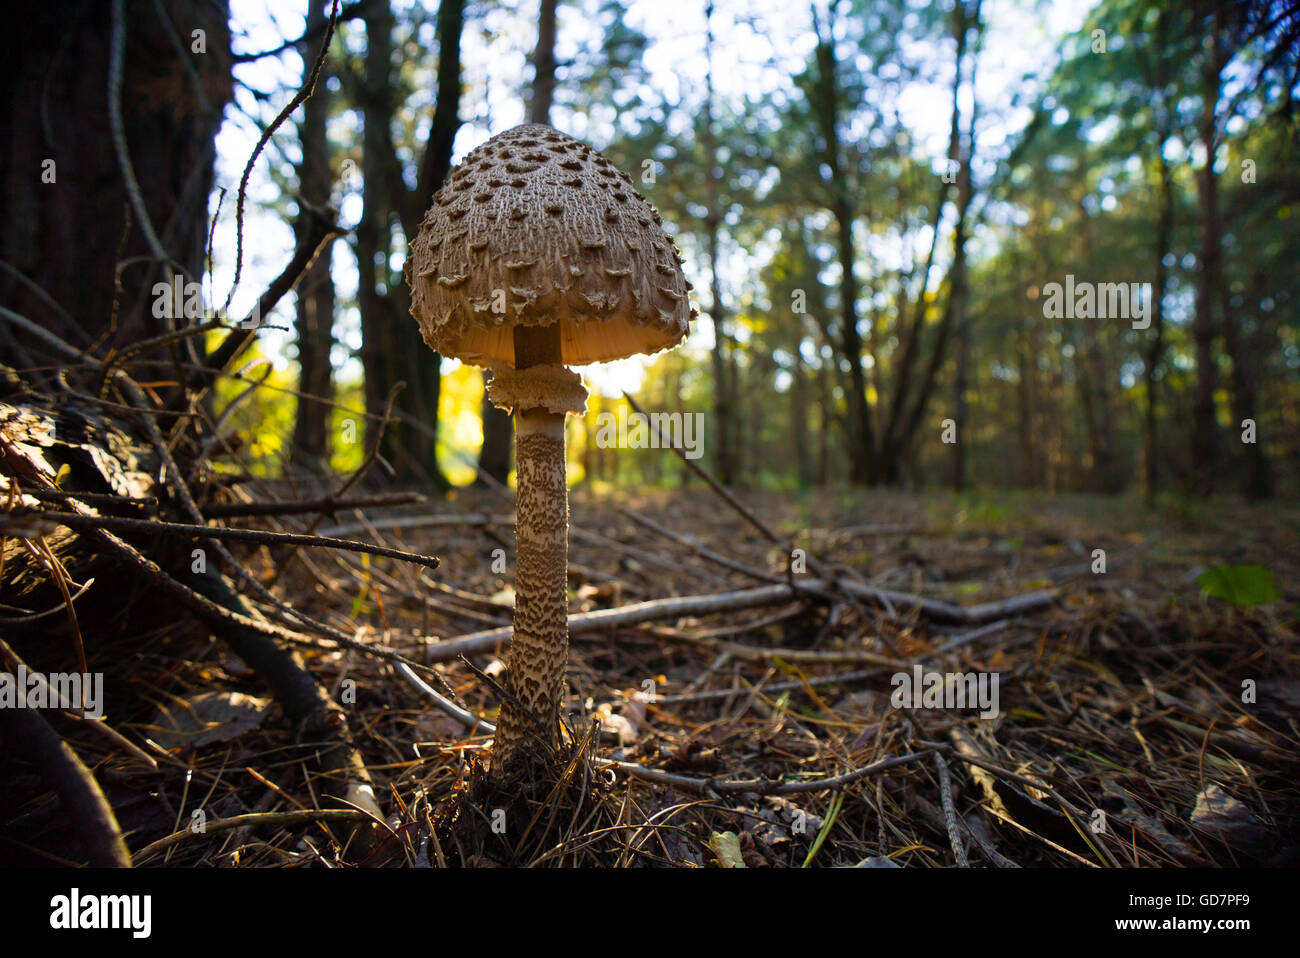 large parasol mushroom at forest Stock Photo